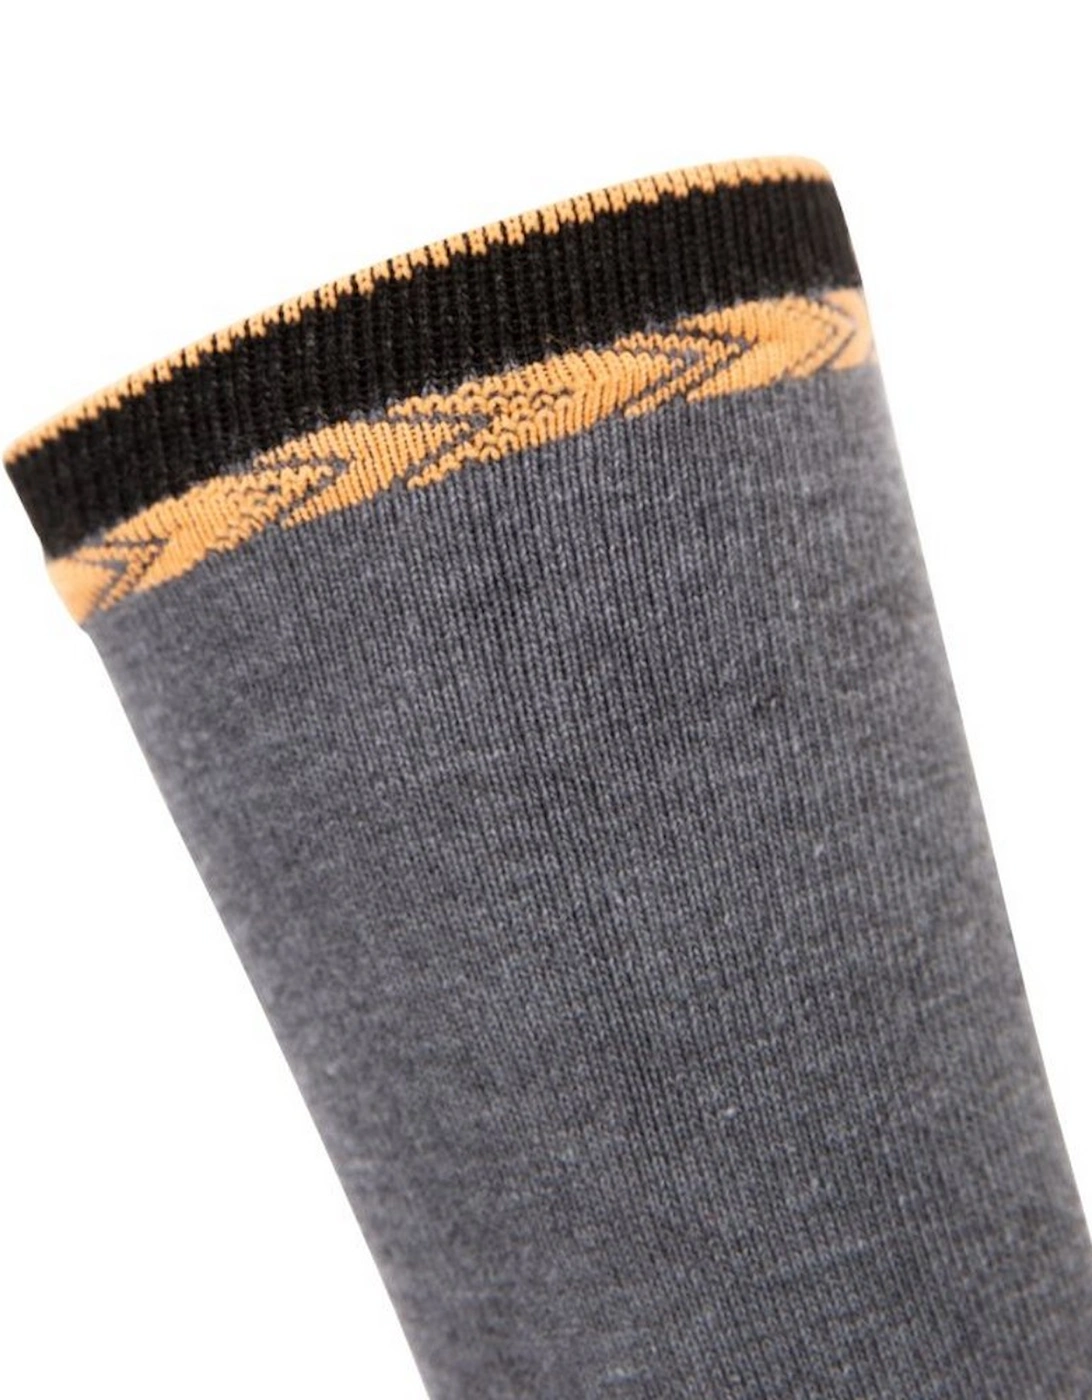 Unisex Adult Cortado Thermal Socks